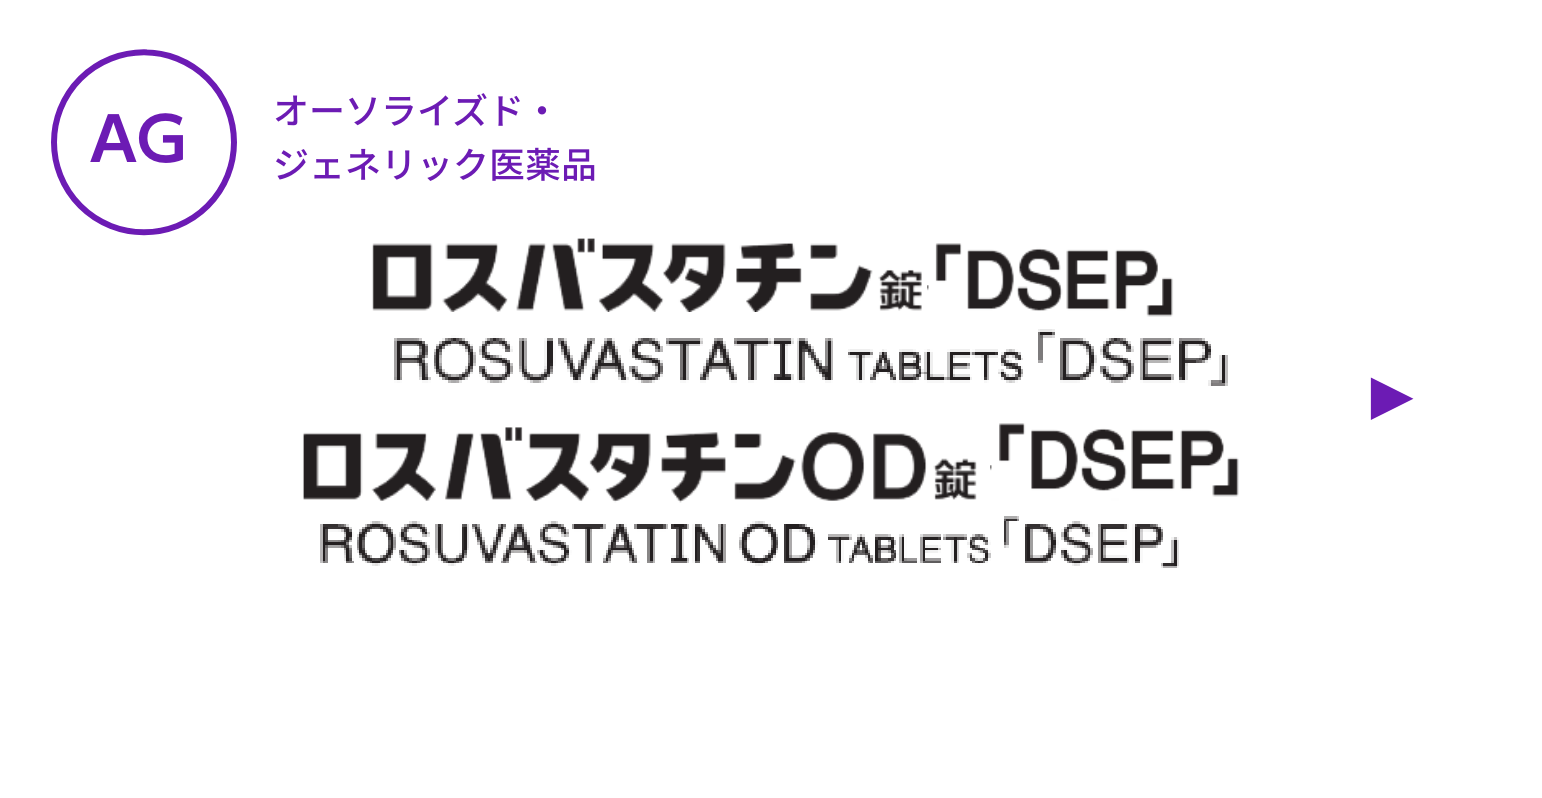 【AG】ロスバスタチン錠「DSEP」ロスバスタチンOD錠「DSEP」